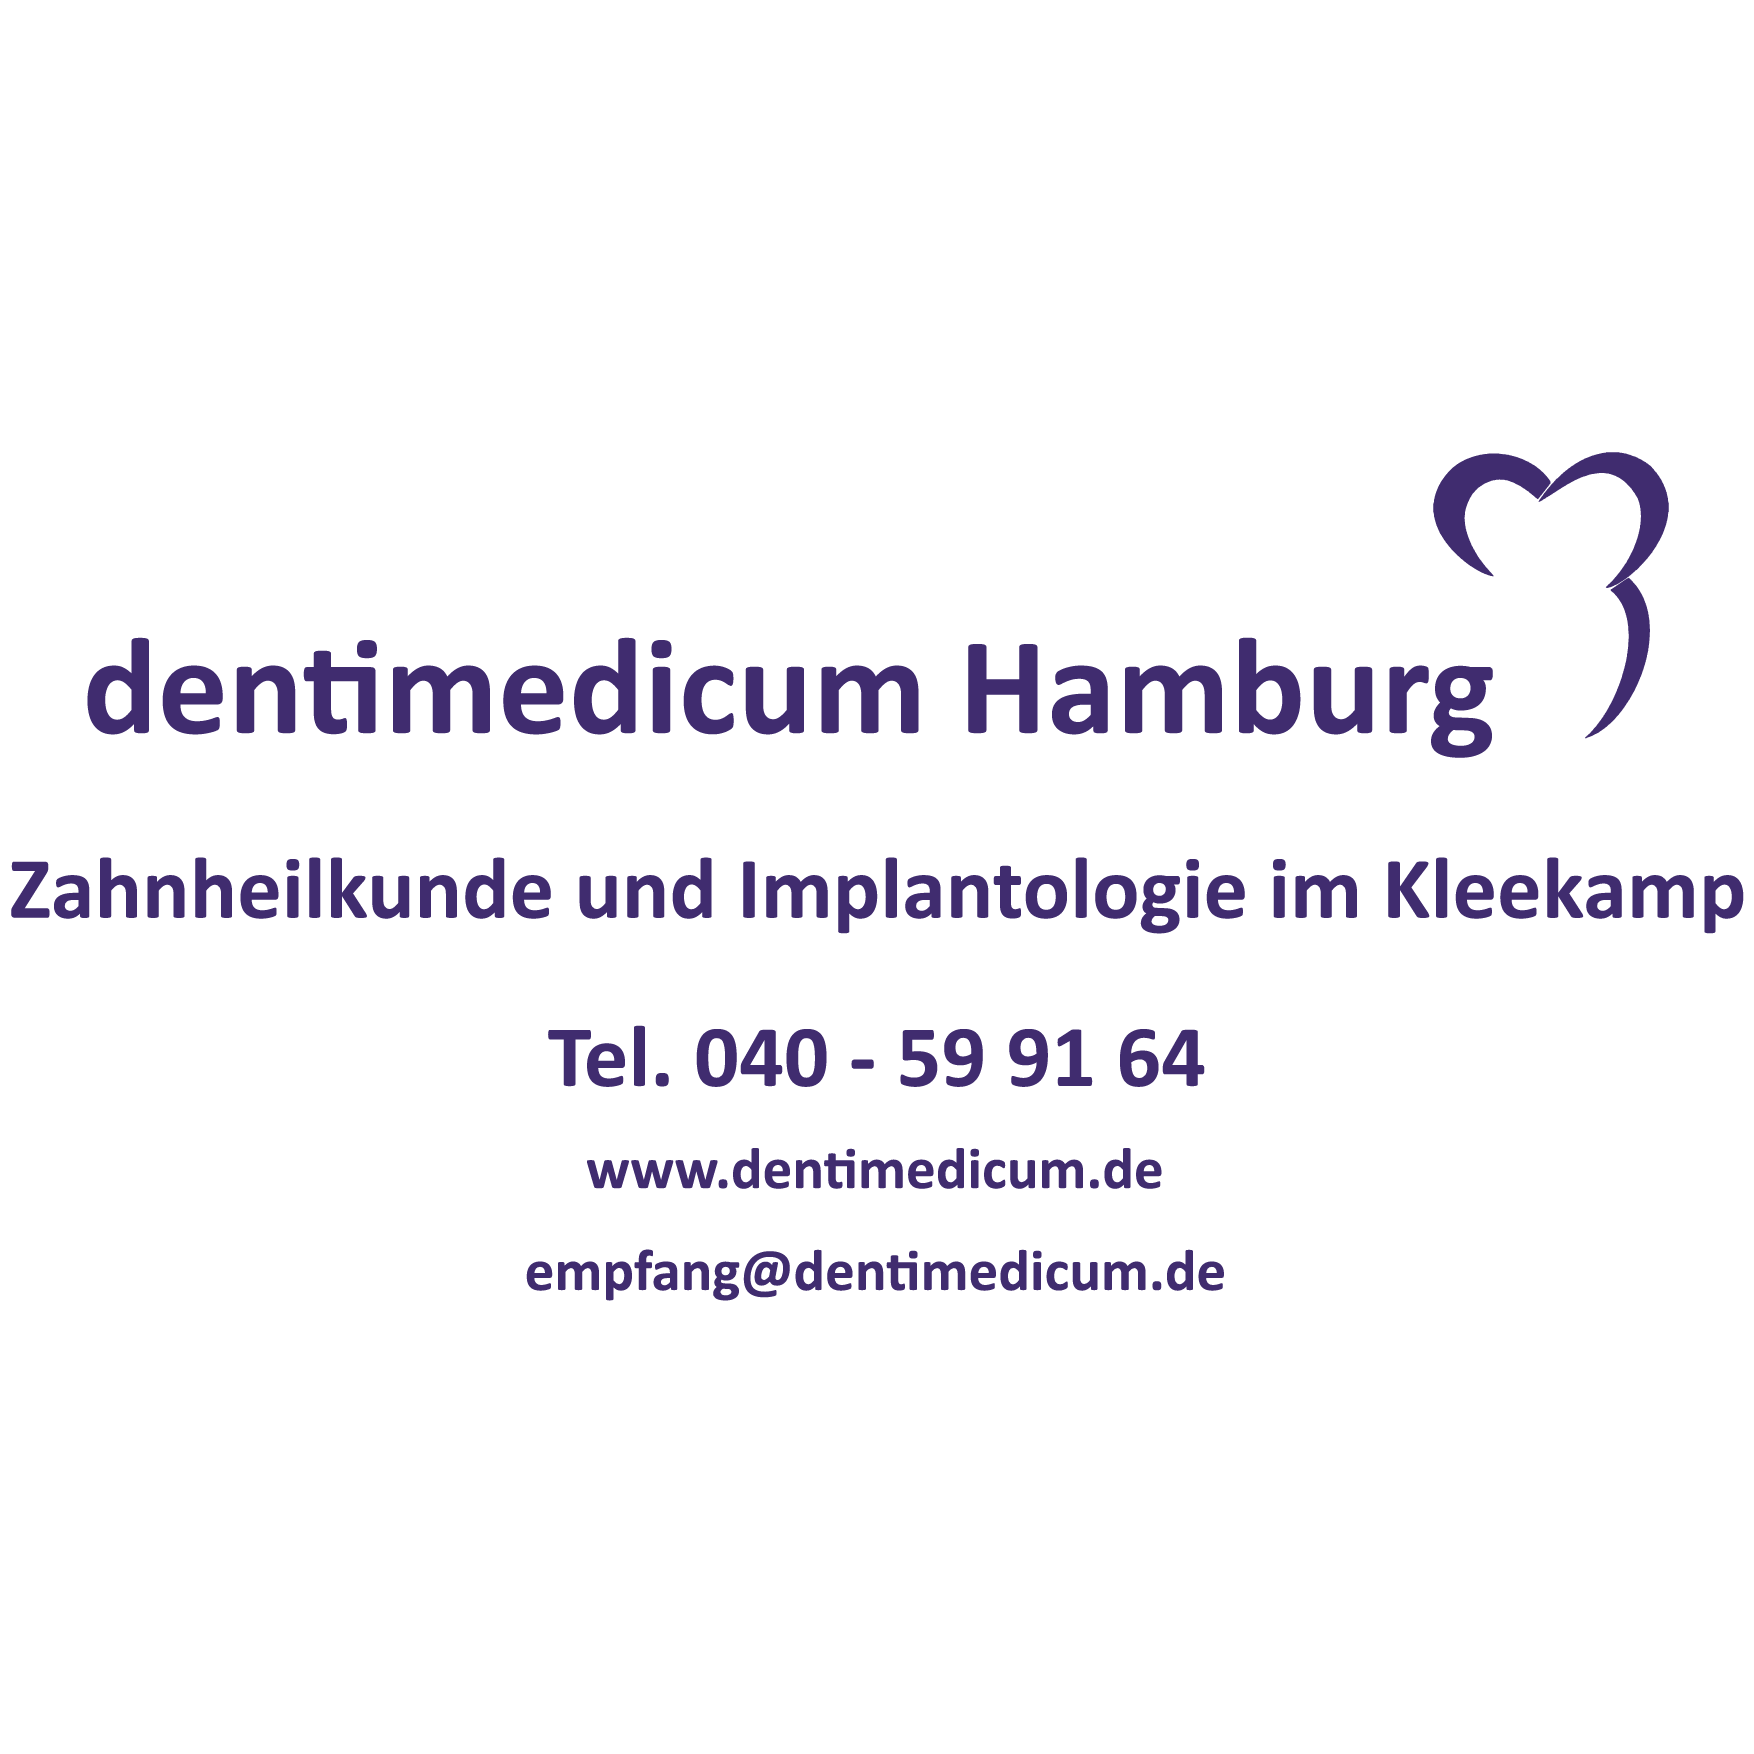 Dentimedicum Hamburg MVZ GmbH Logo